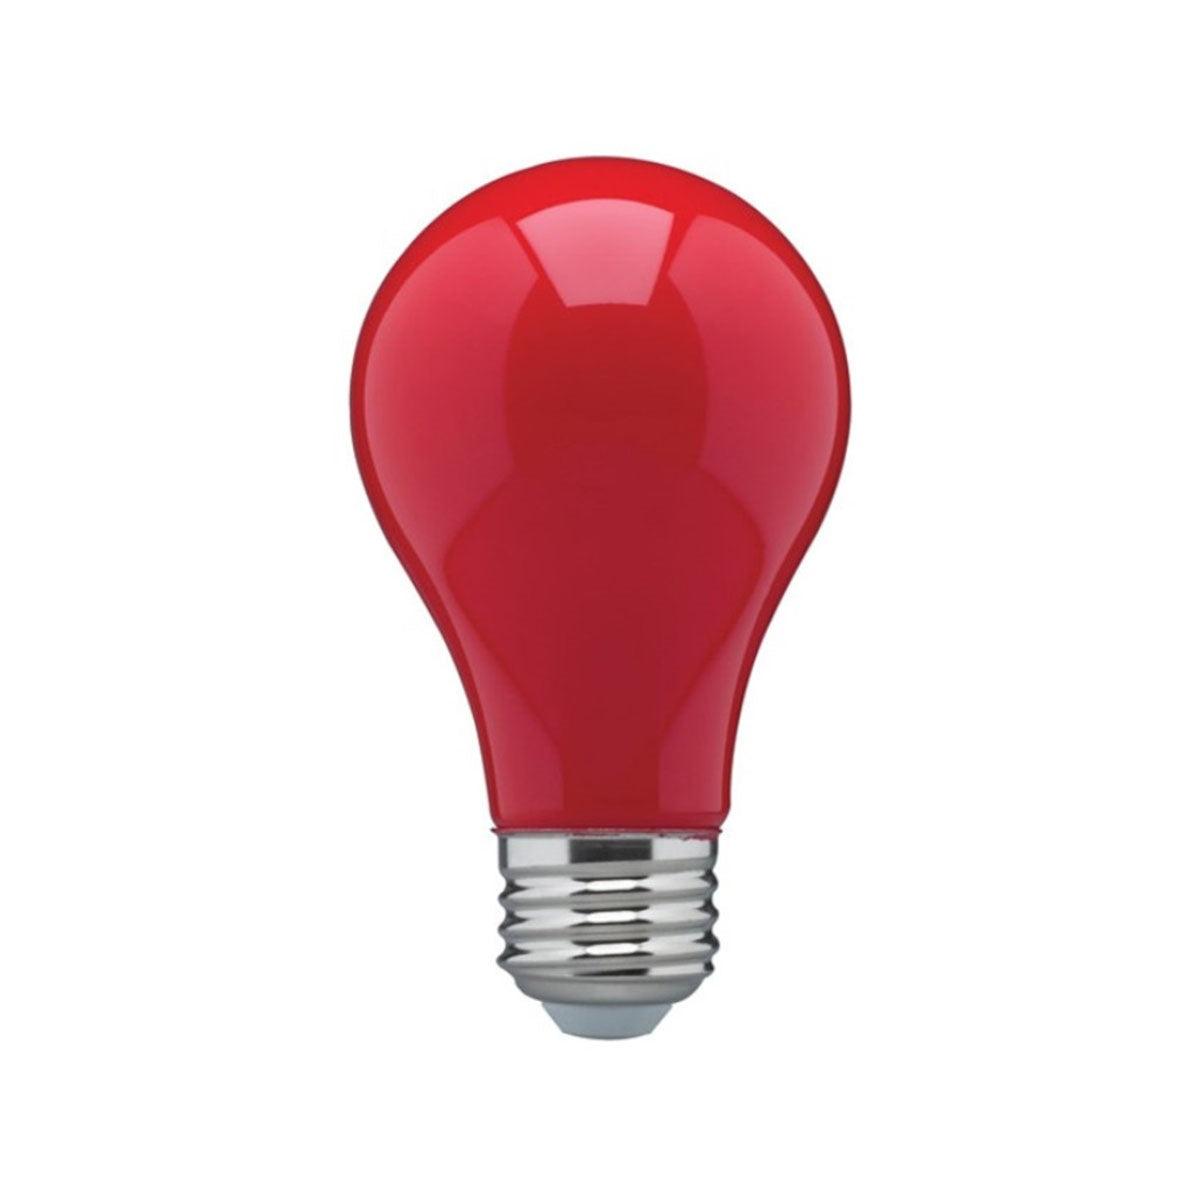 A19 LED Bulb, 100W Equivalent, 8 Watt, Lumens, Red, E26 Medium Base, Frosted Finish